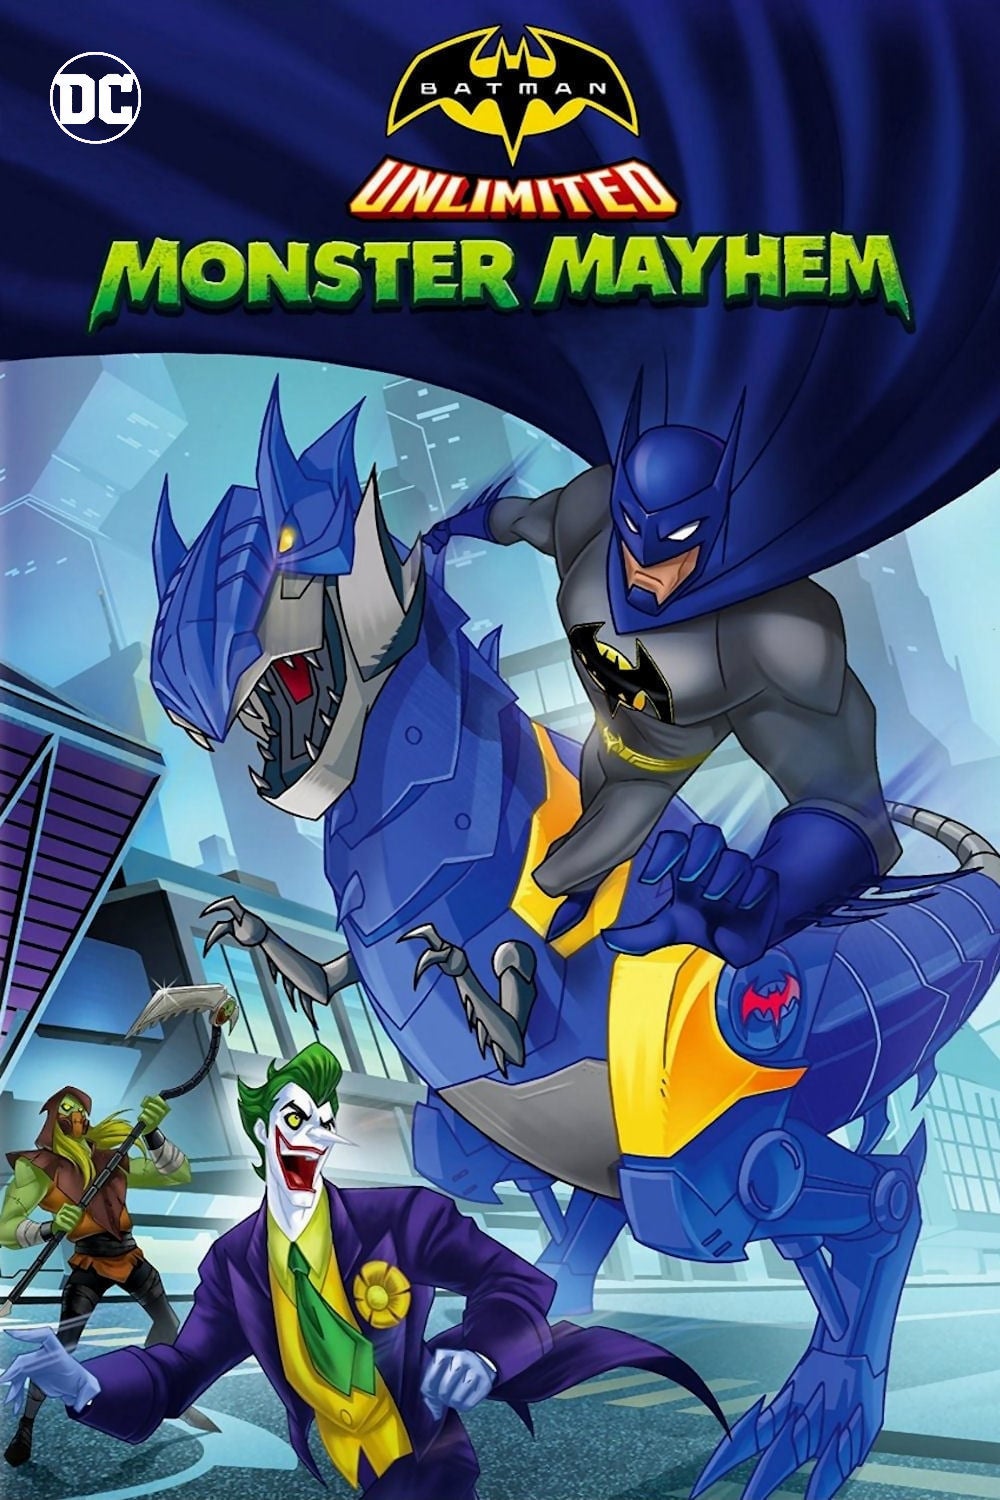 Batman Unlimited: Monster Mayhem [Sub-ITA] (2015)